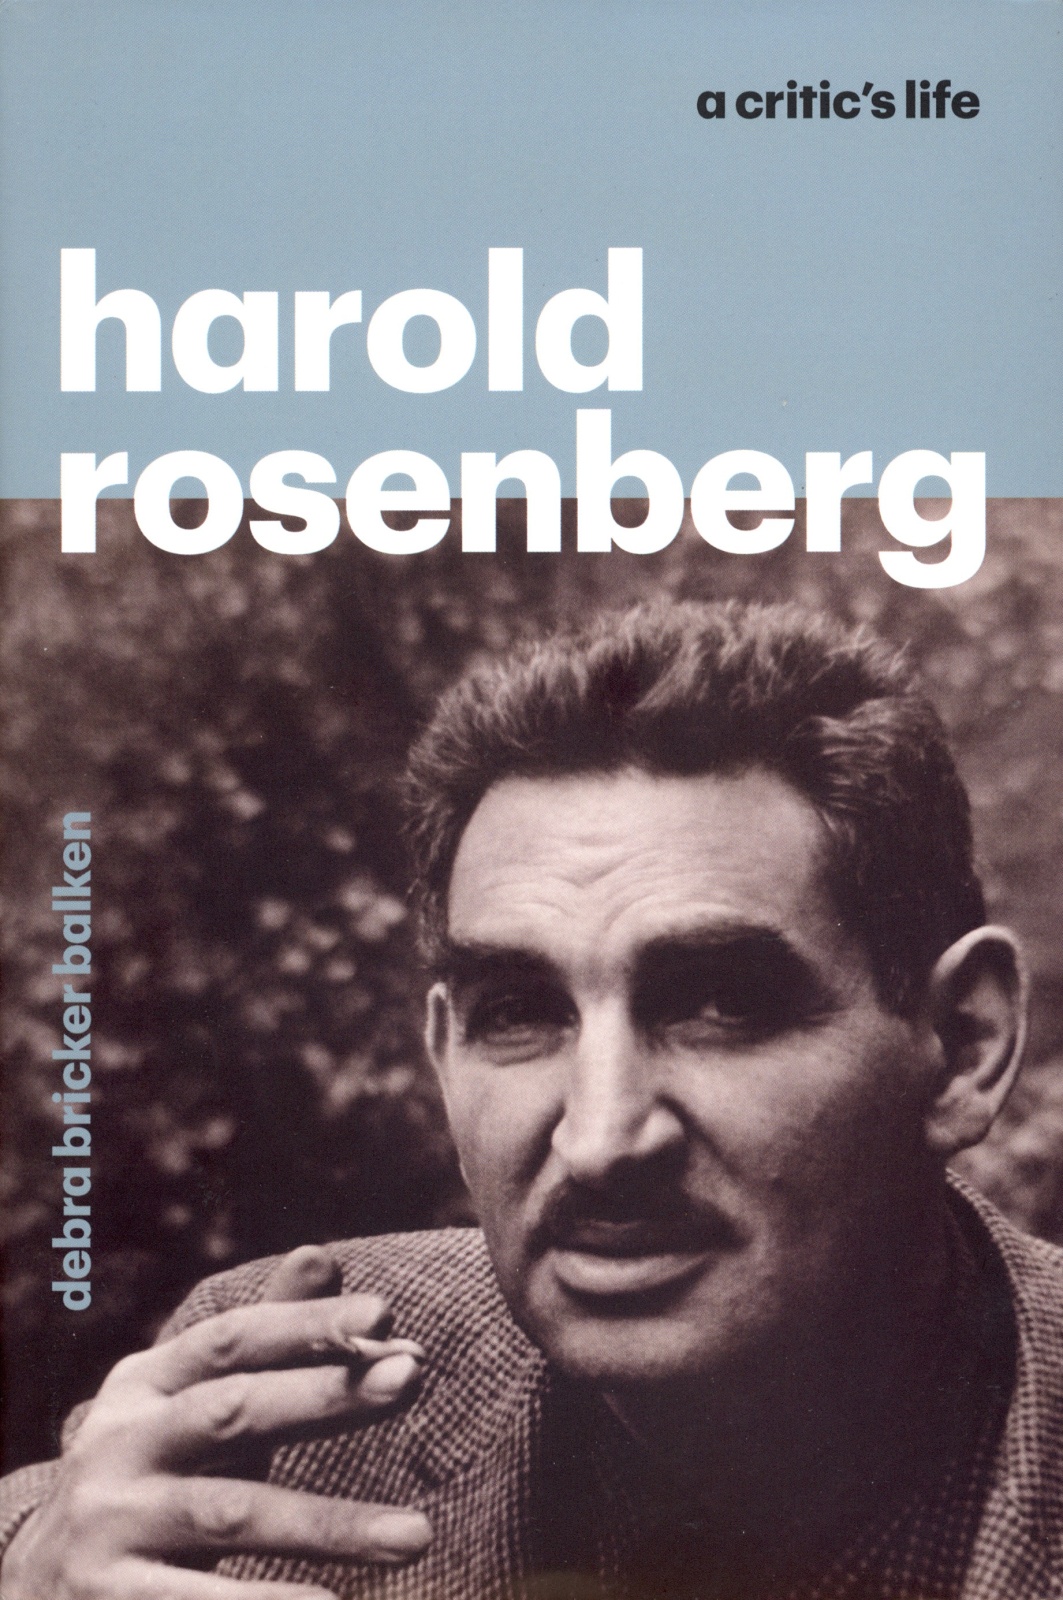 Harold Rosenberg: A Critic's Life - Debra Bricker Balken / University of Chicago Press - Catalogues - Alexandre Gallery